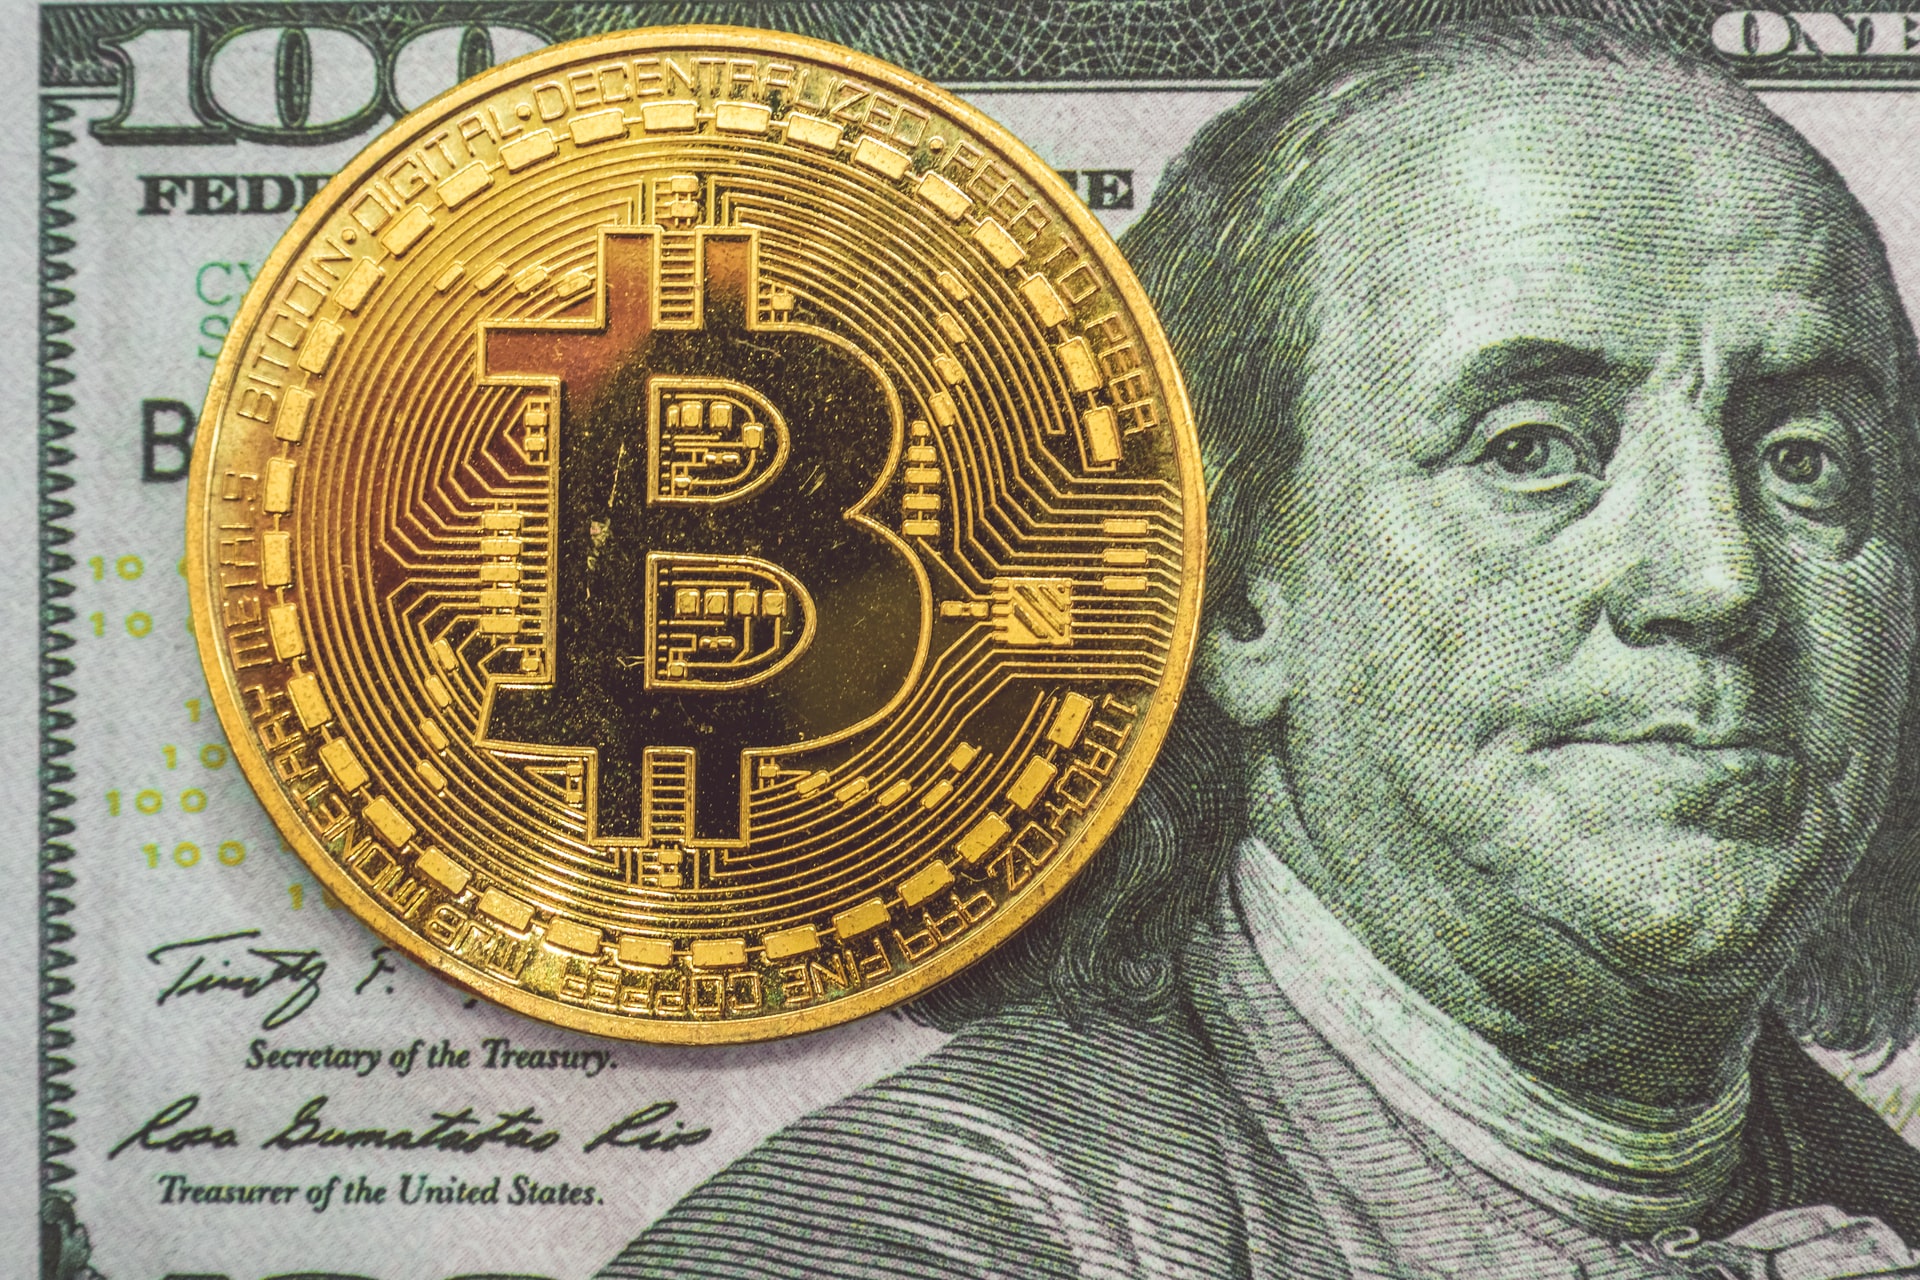 Bitcoin (BTC) cash bill cover image